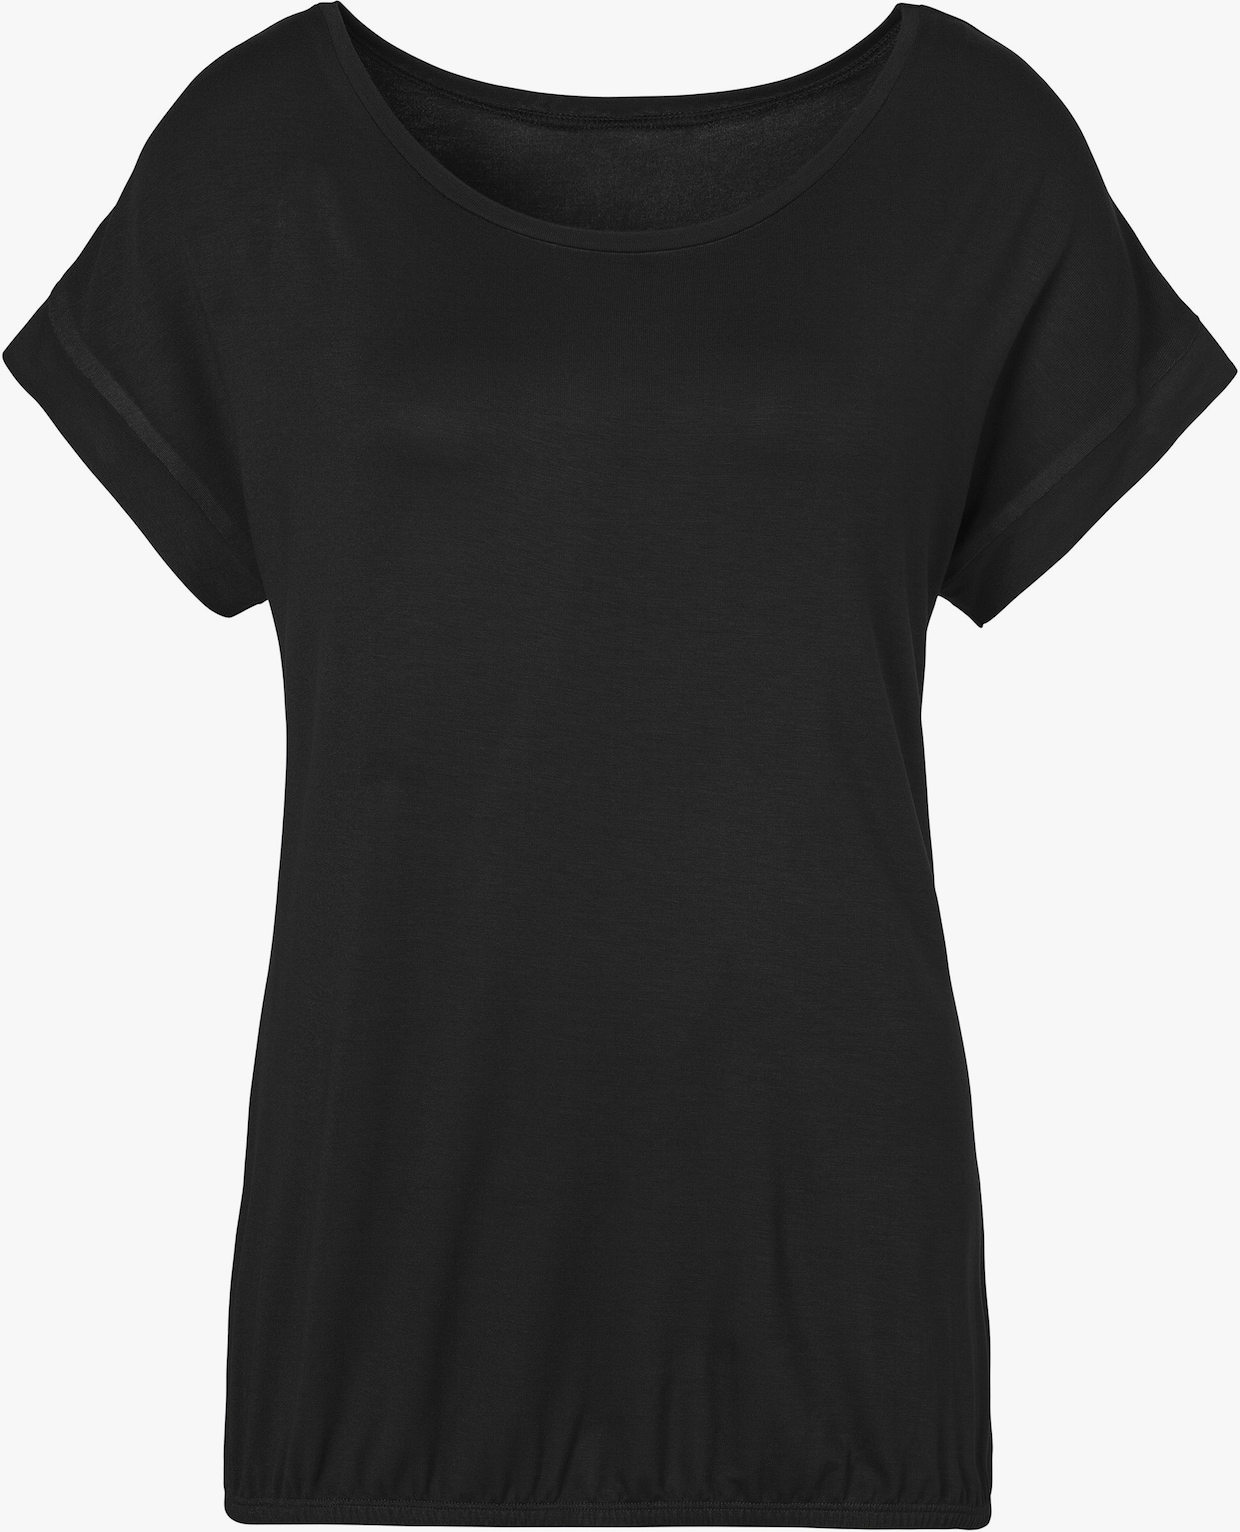 Vivance T-Shirt - lila, schwarz